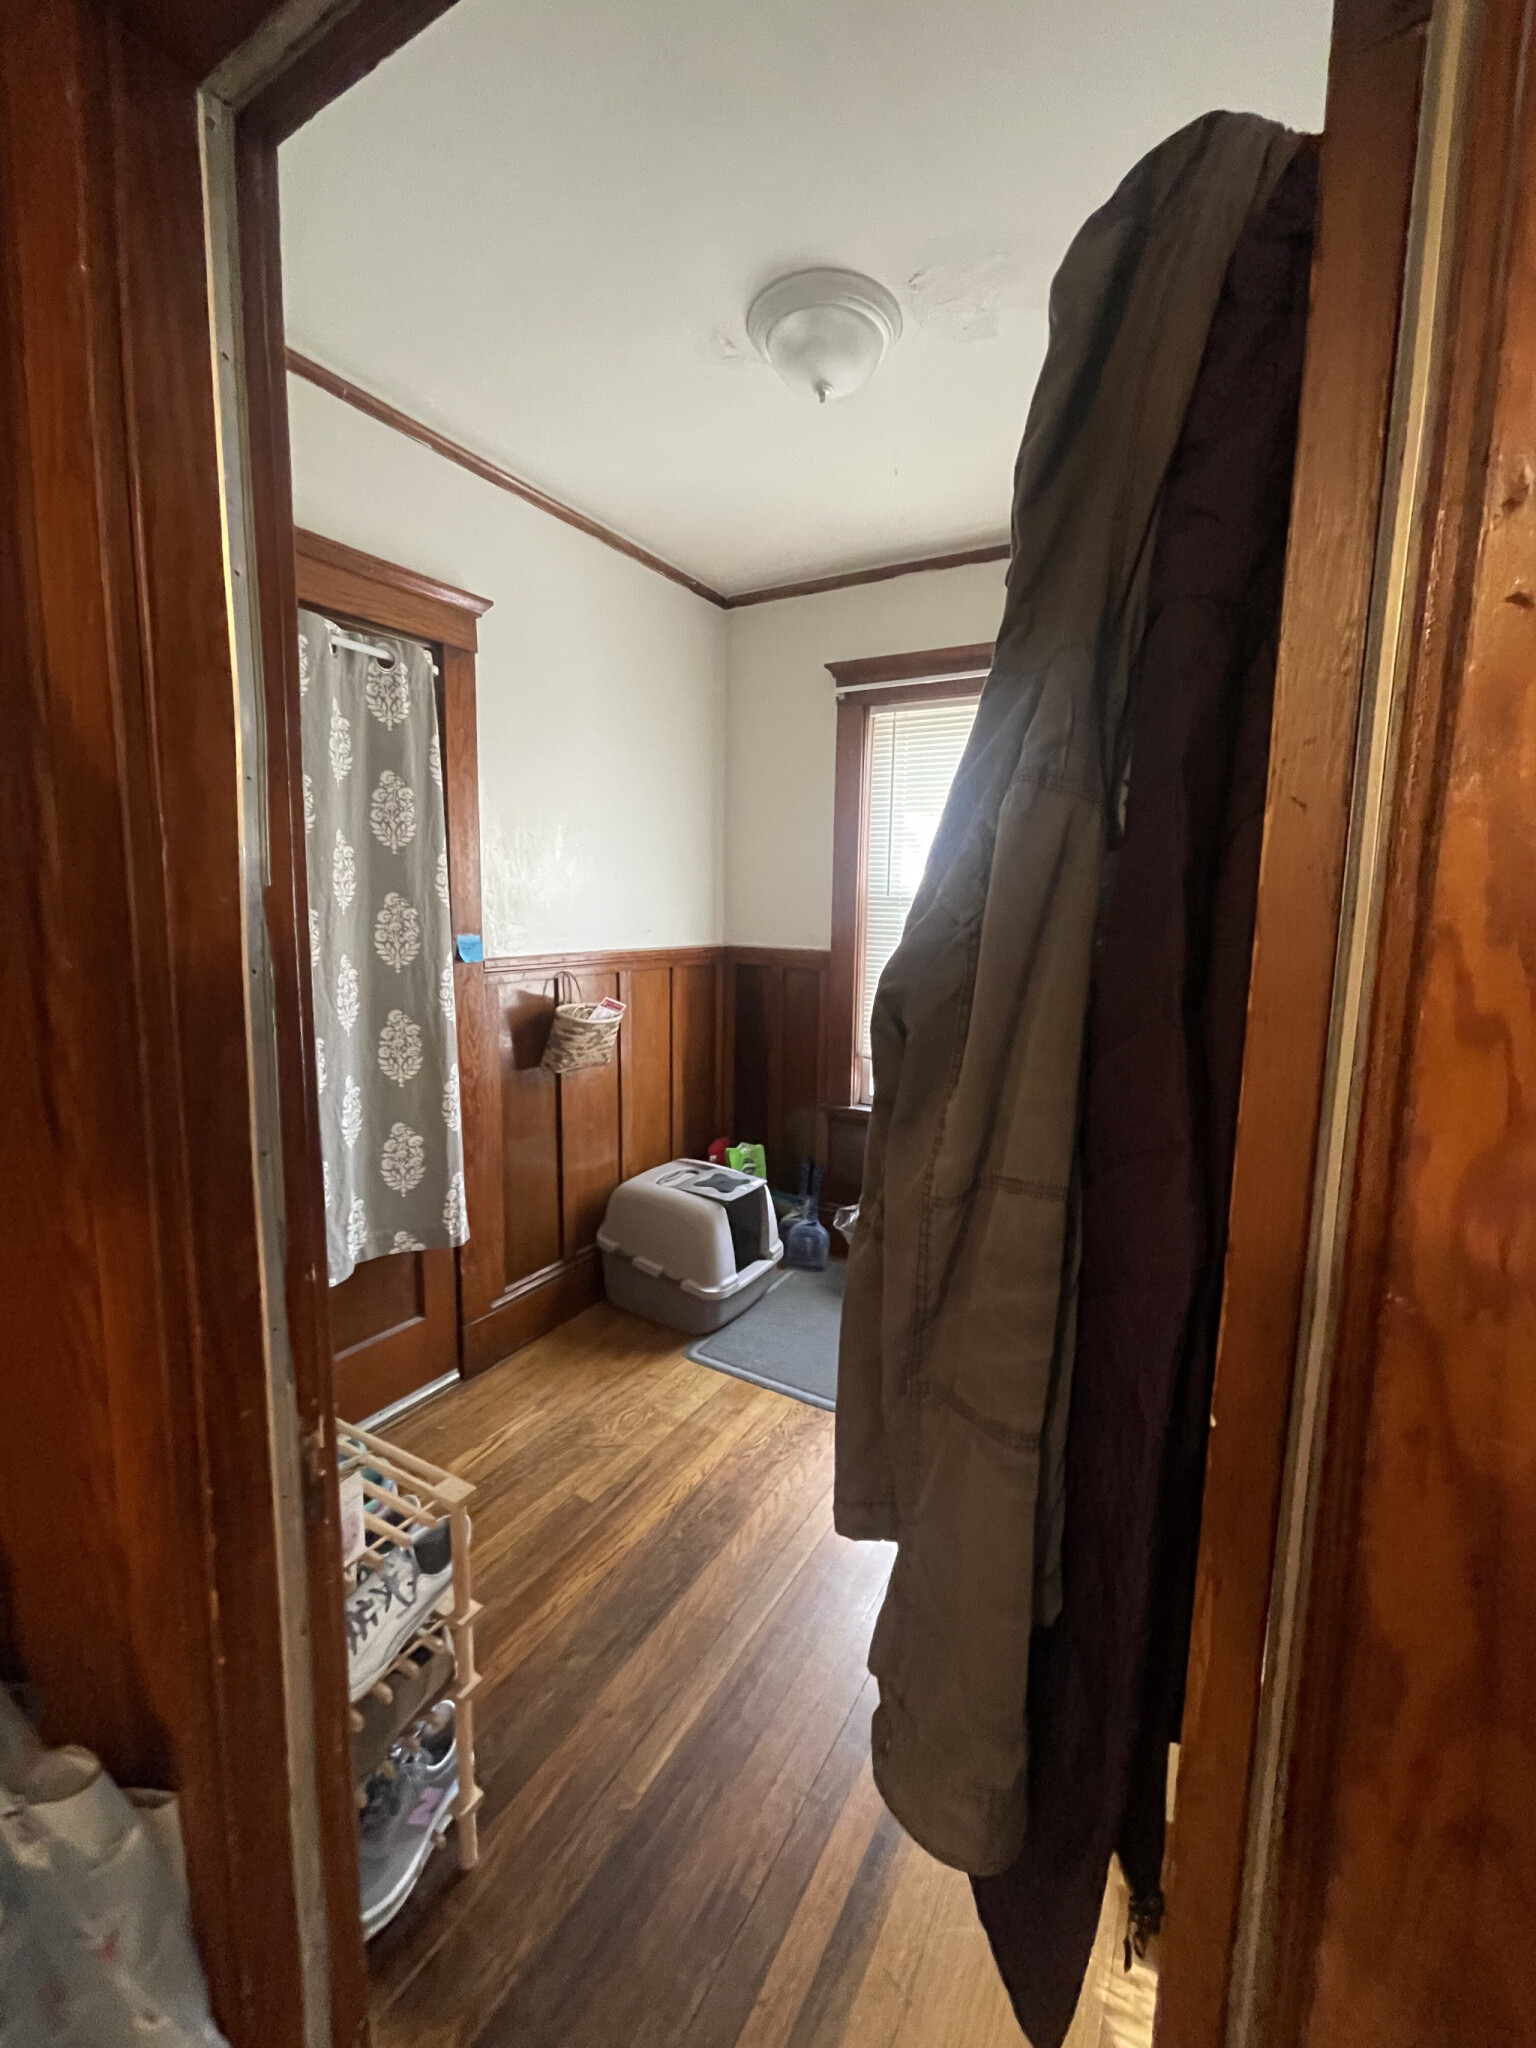 Photos of apartment on Pinckney,Somerville MA 02145